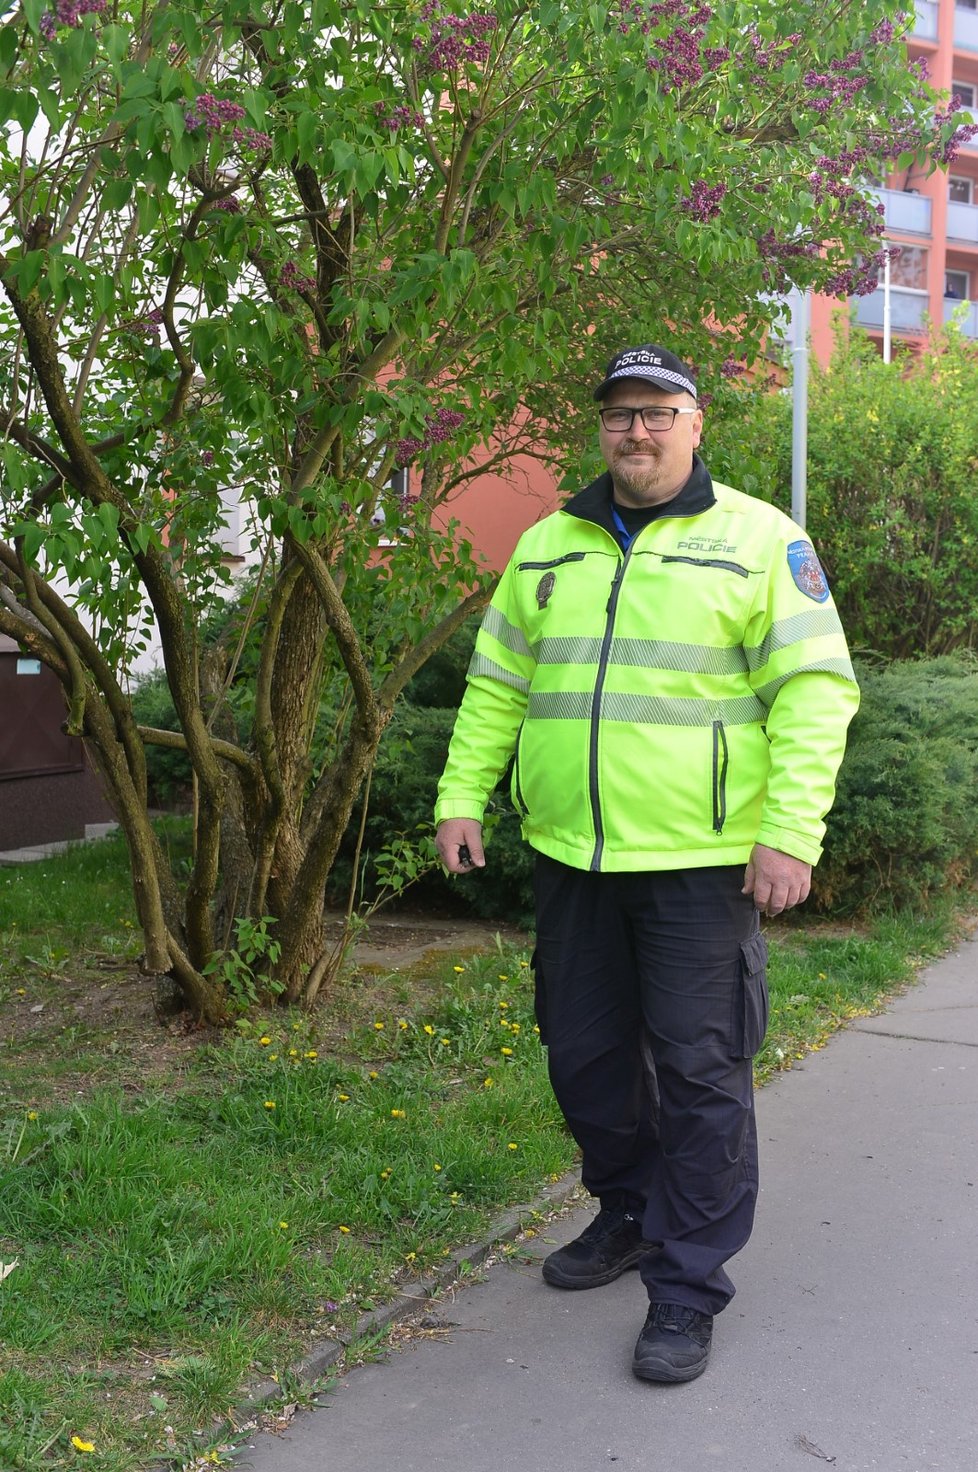 Strážník Karel Roštík (48) pracuje u městské policie už 26 let.